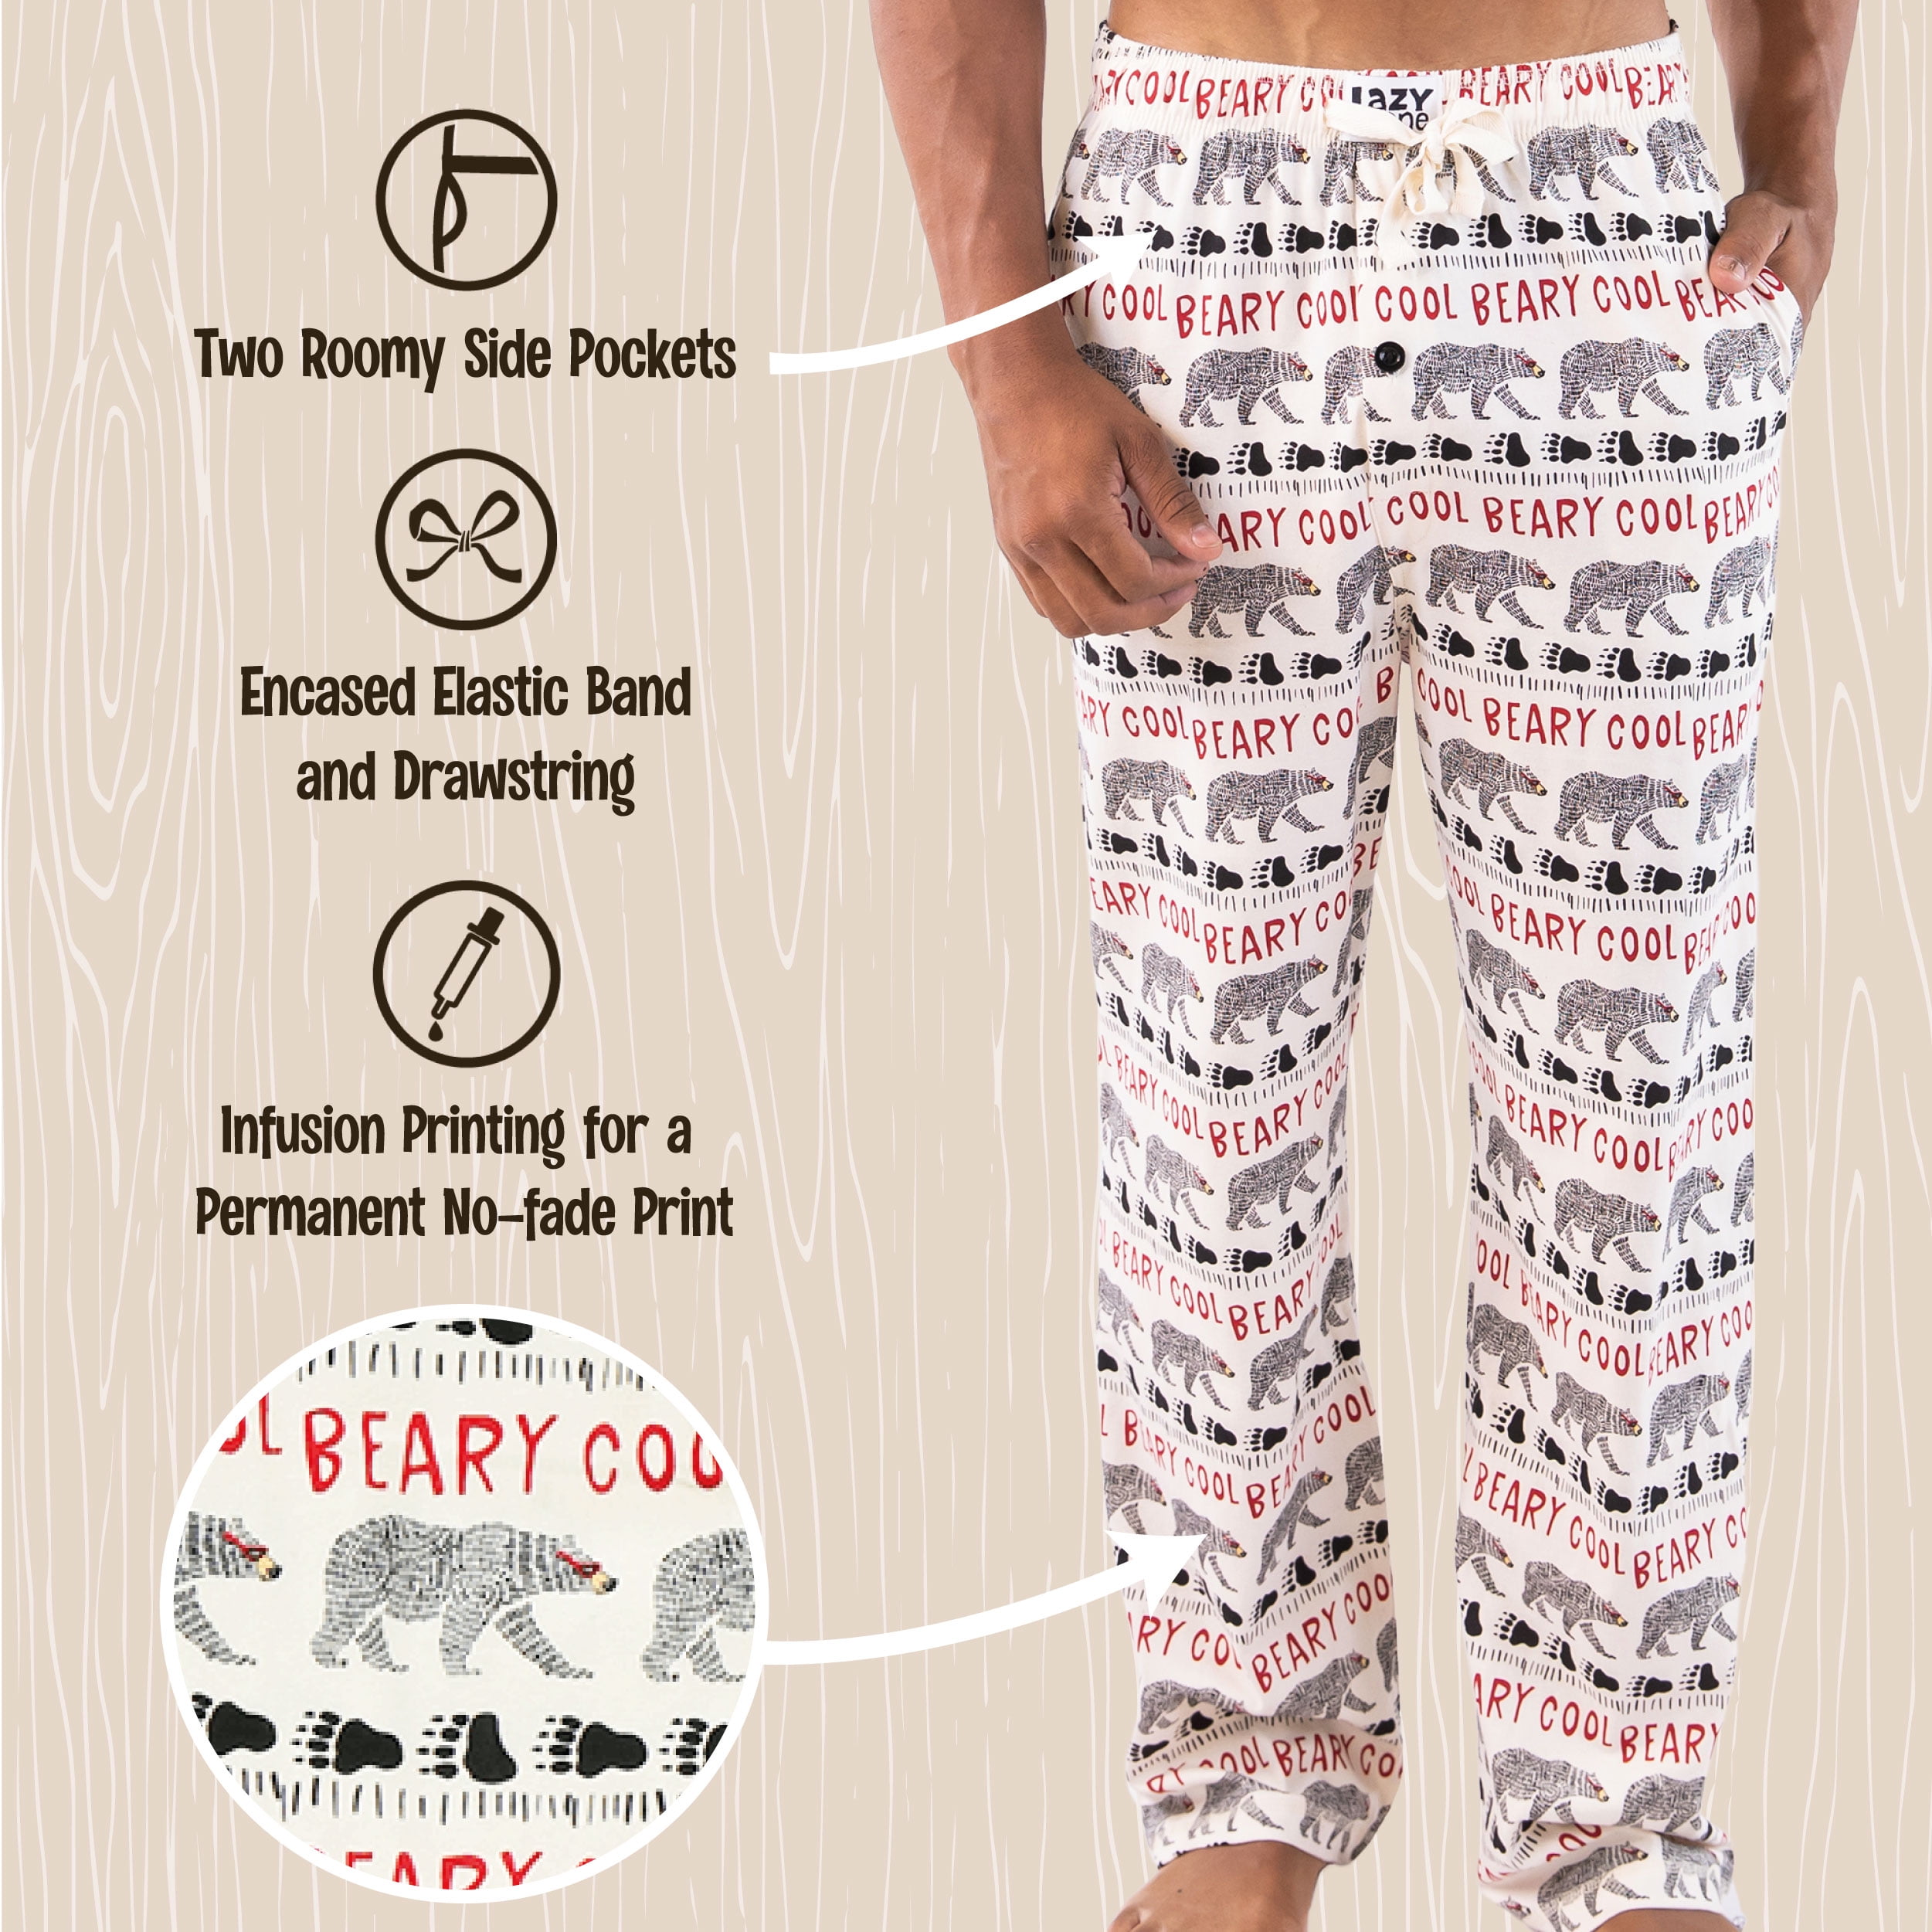 10 Popular Designs of Pajama Pants for Men and Women